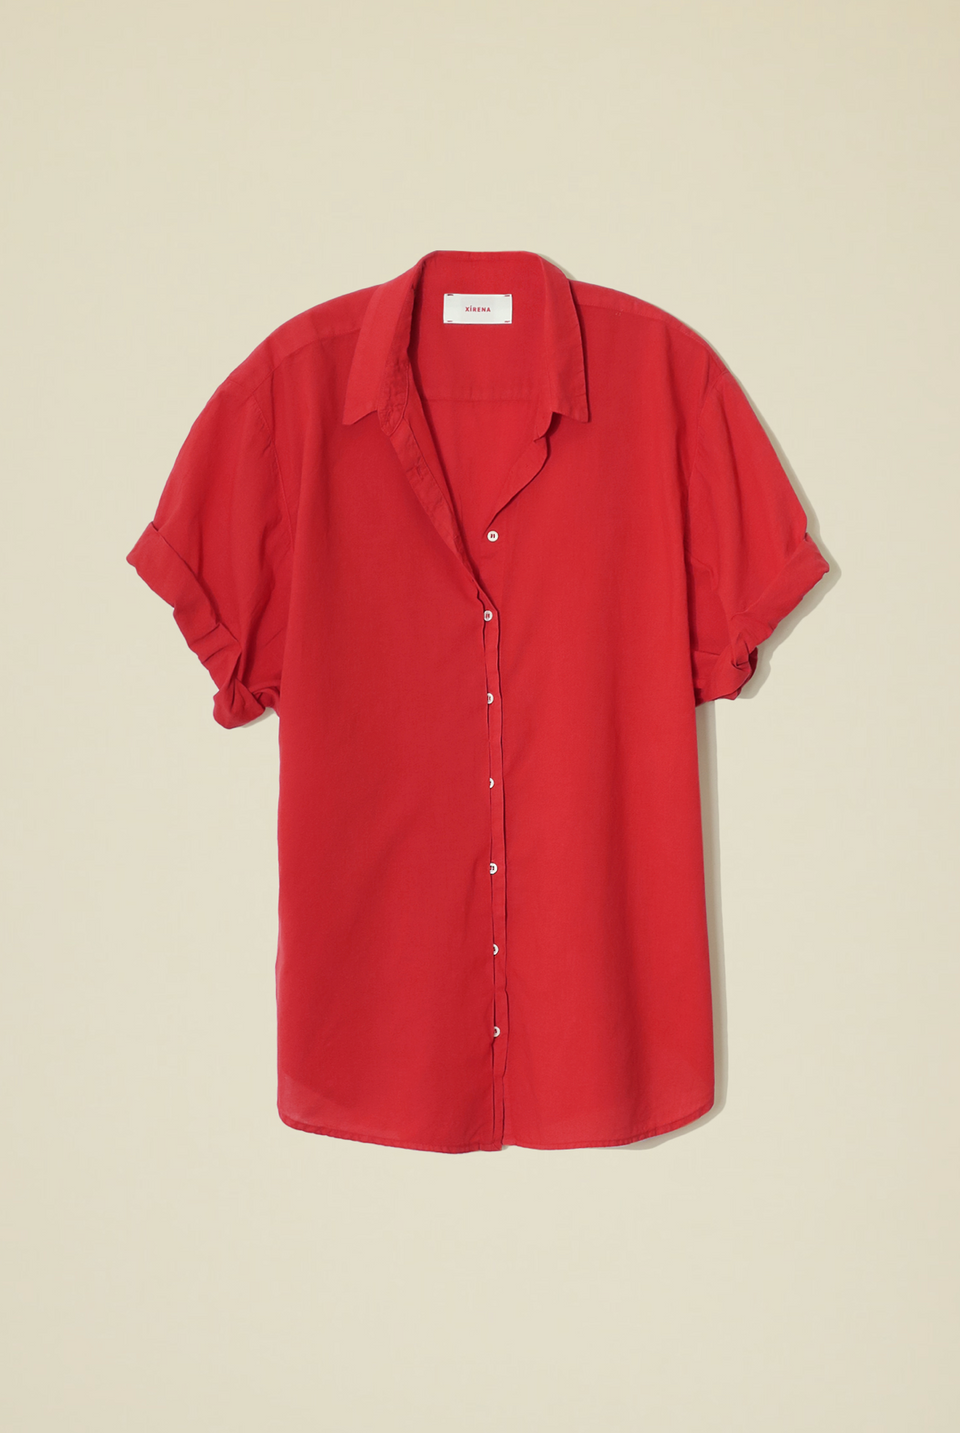 Channing Shirt - Redstone